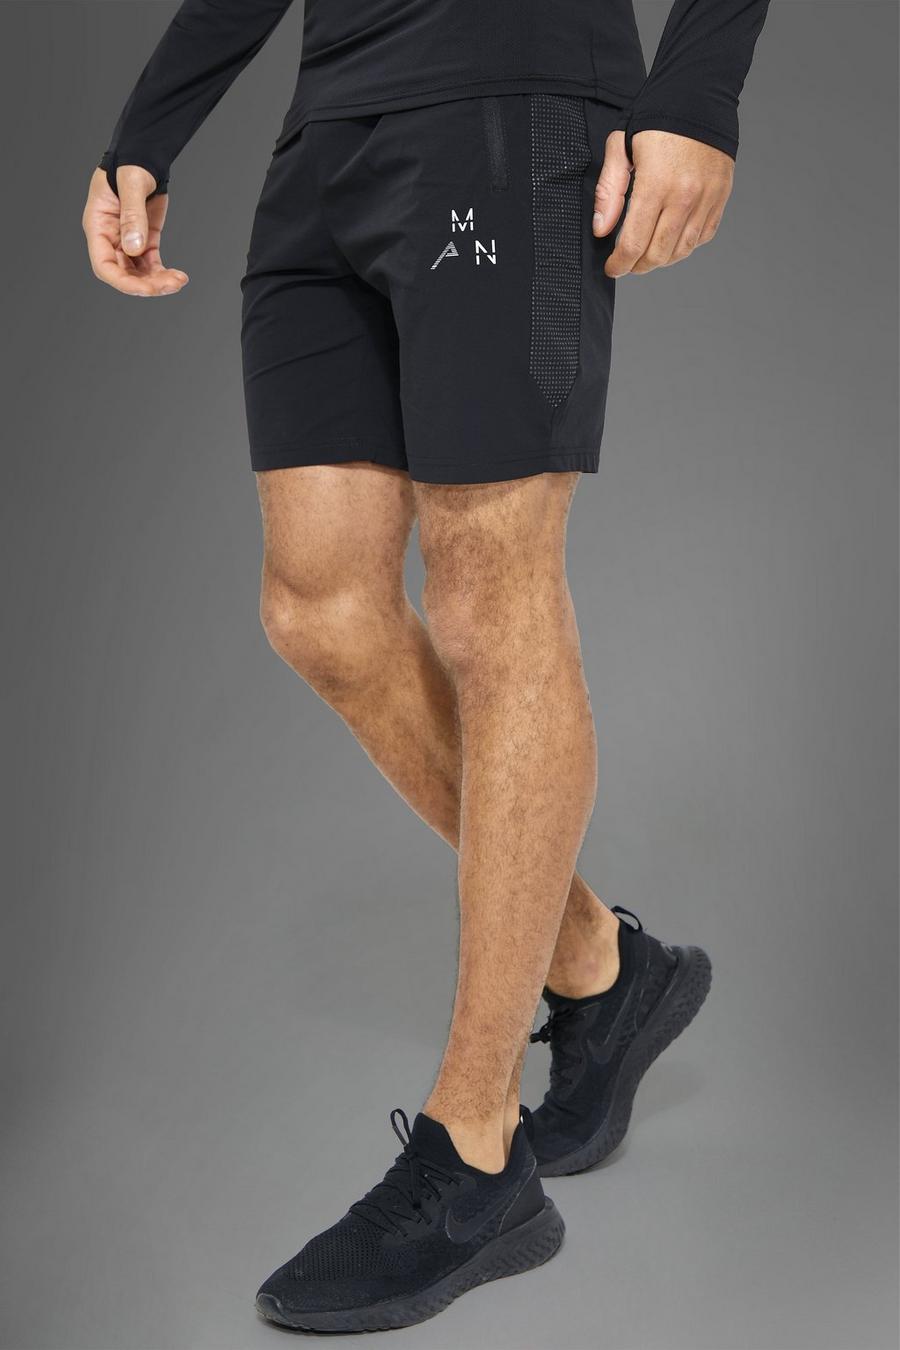 Men's Workout Shorts, Men's Gym Shorts